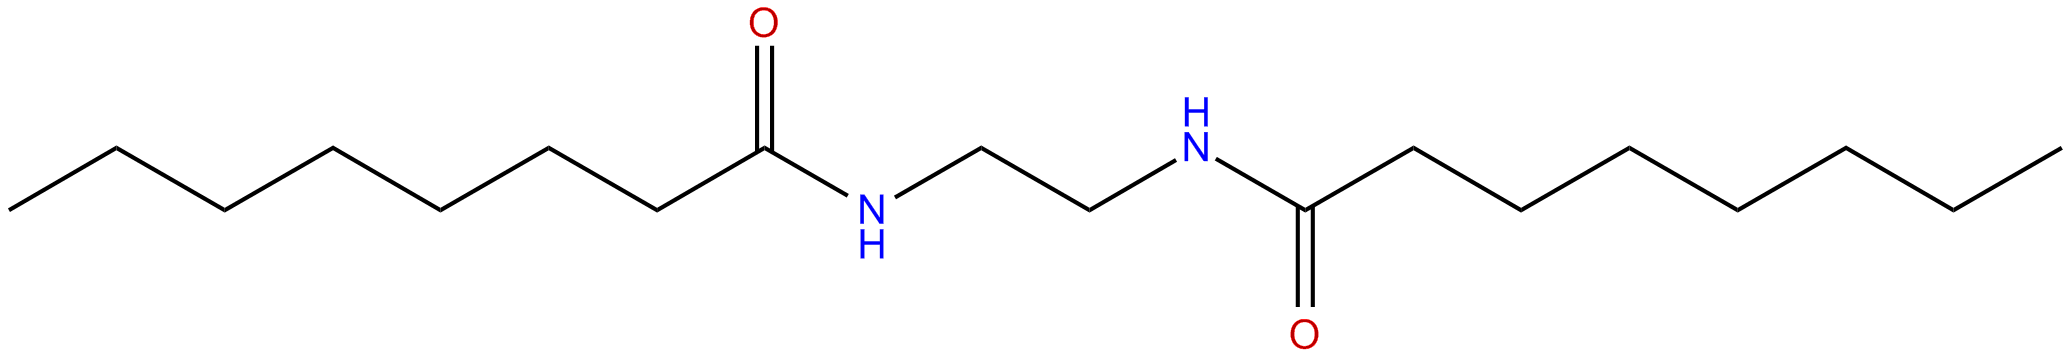 Image of N,N'-1,2-ethanediylbisoctanamide